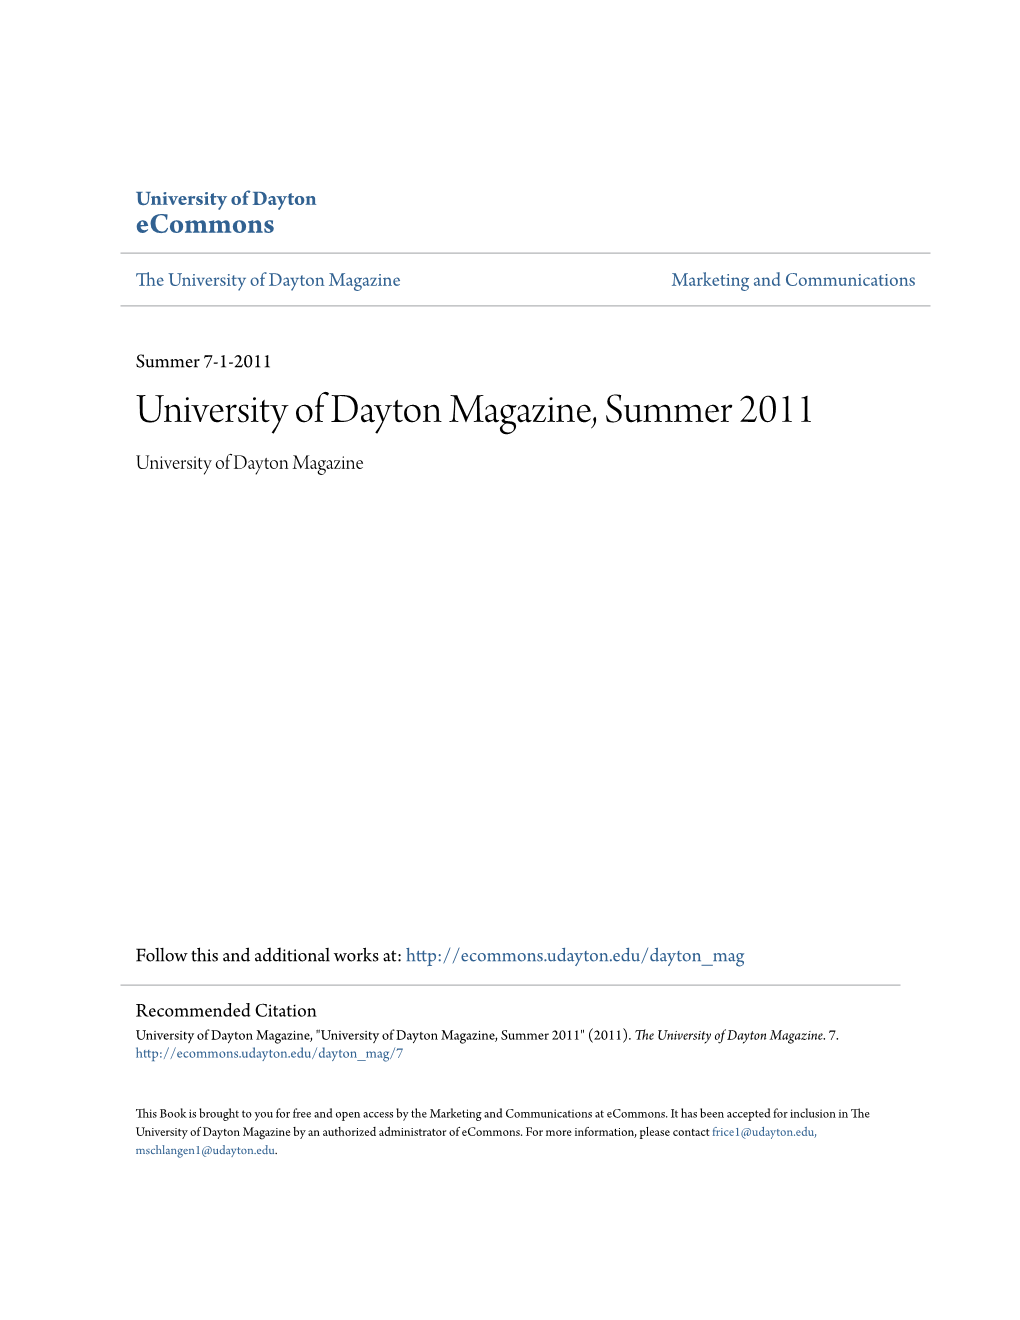 University of Dayton Magazine, Summer 2011 University of Dayton Magazine